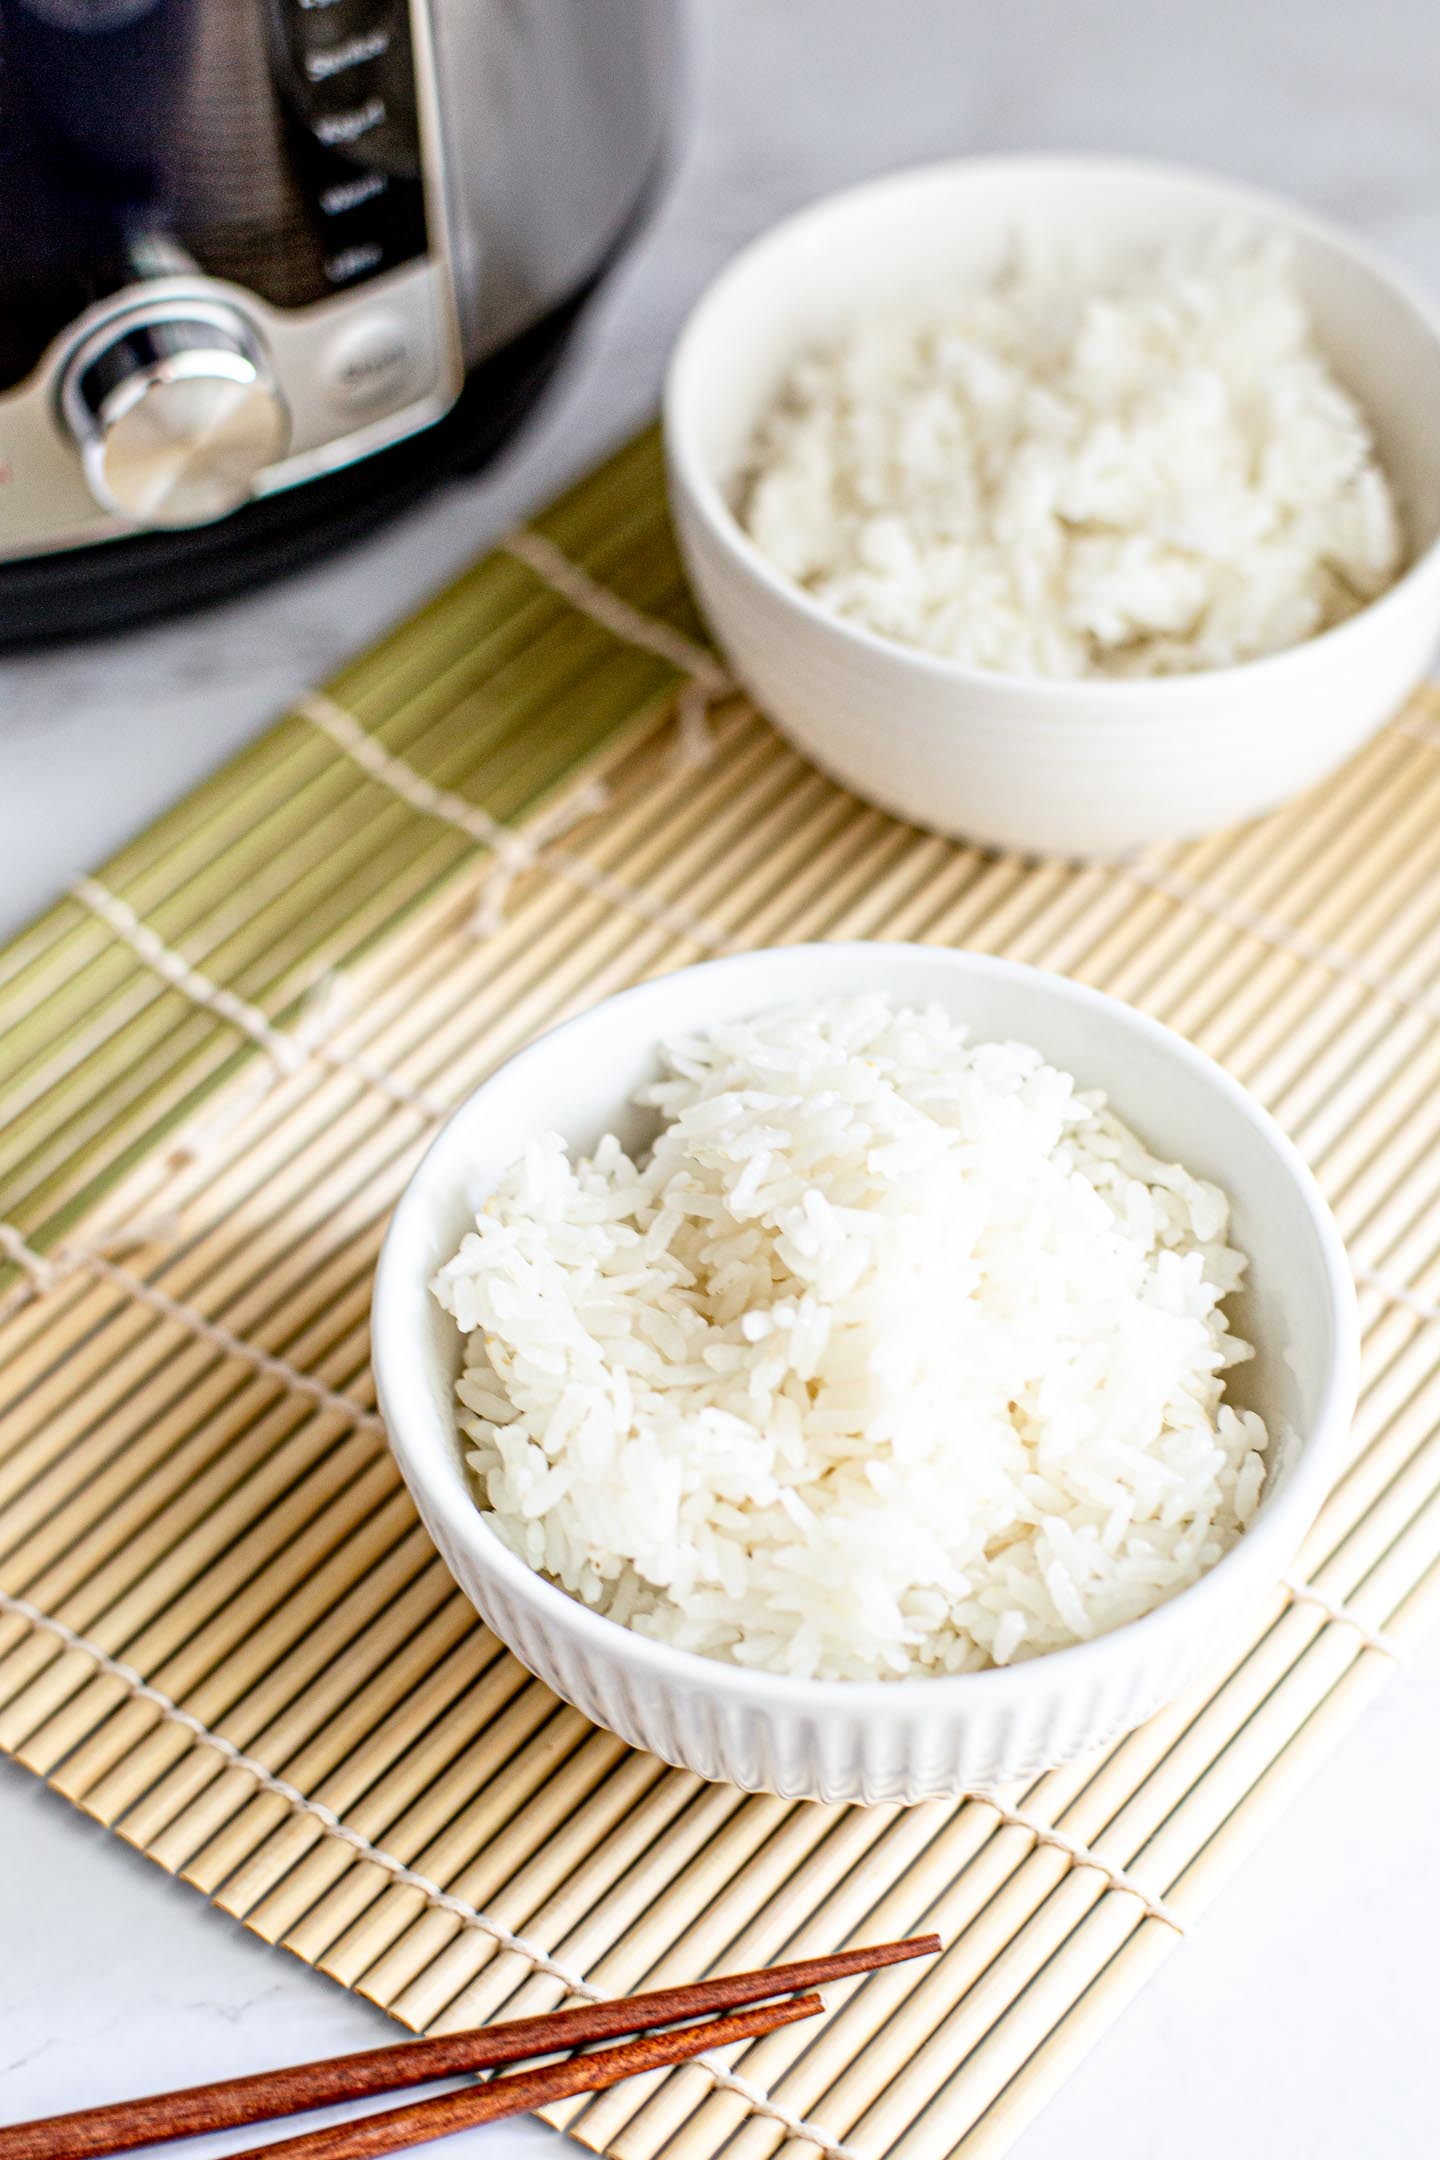 https://izumimizokawa.com/wp-content/uploads/2022/06/How-To-Make-BEST-White-Rice-In-Instant-Pot-in-2-Minutes-Vegan-Asian-Recipes-by-Izumi-Mizokawa.jpg